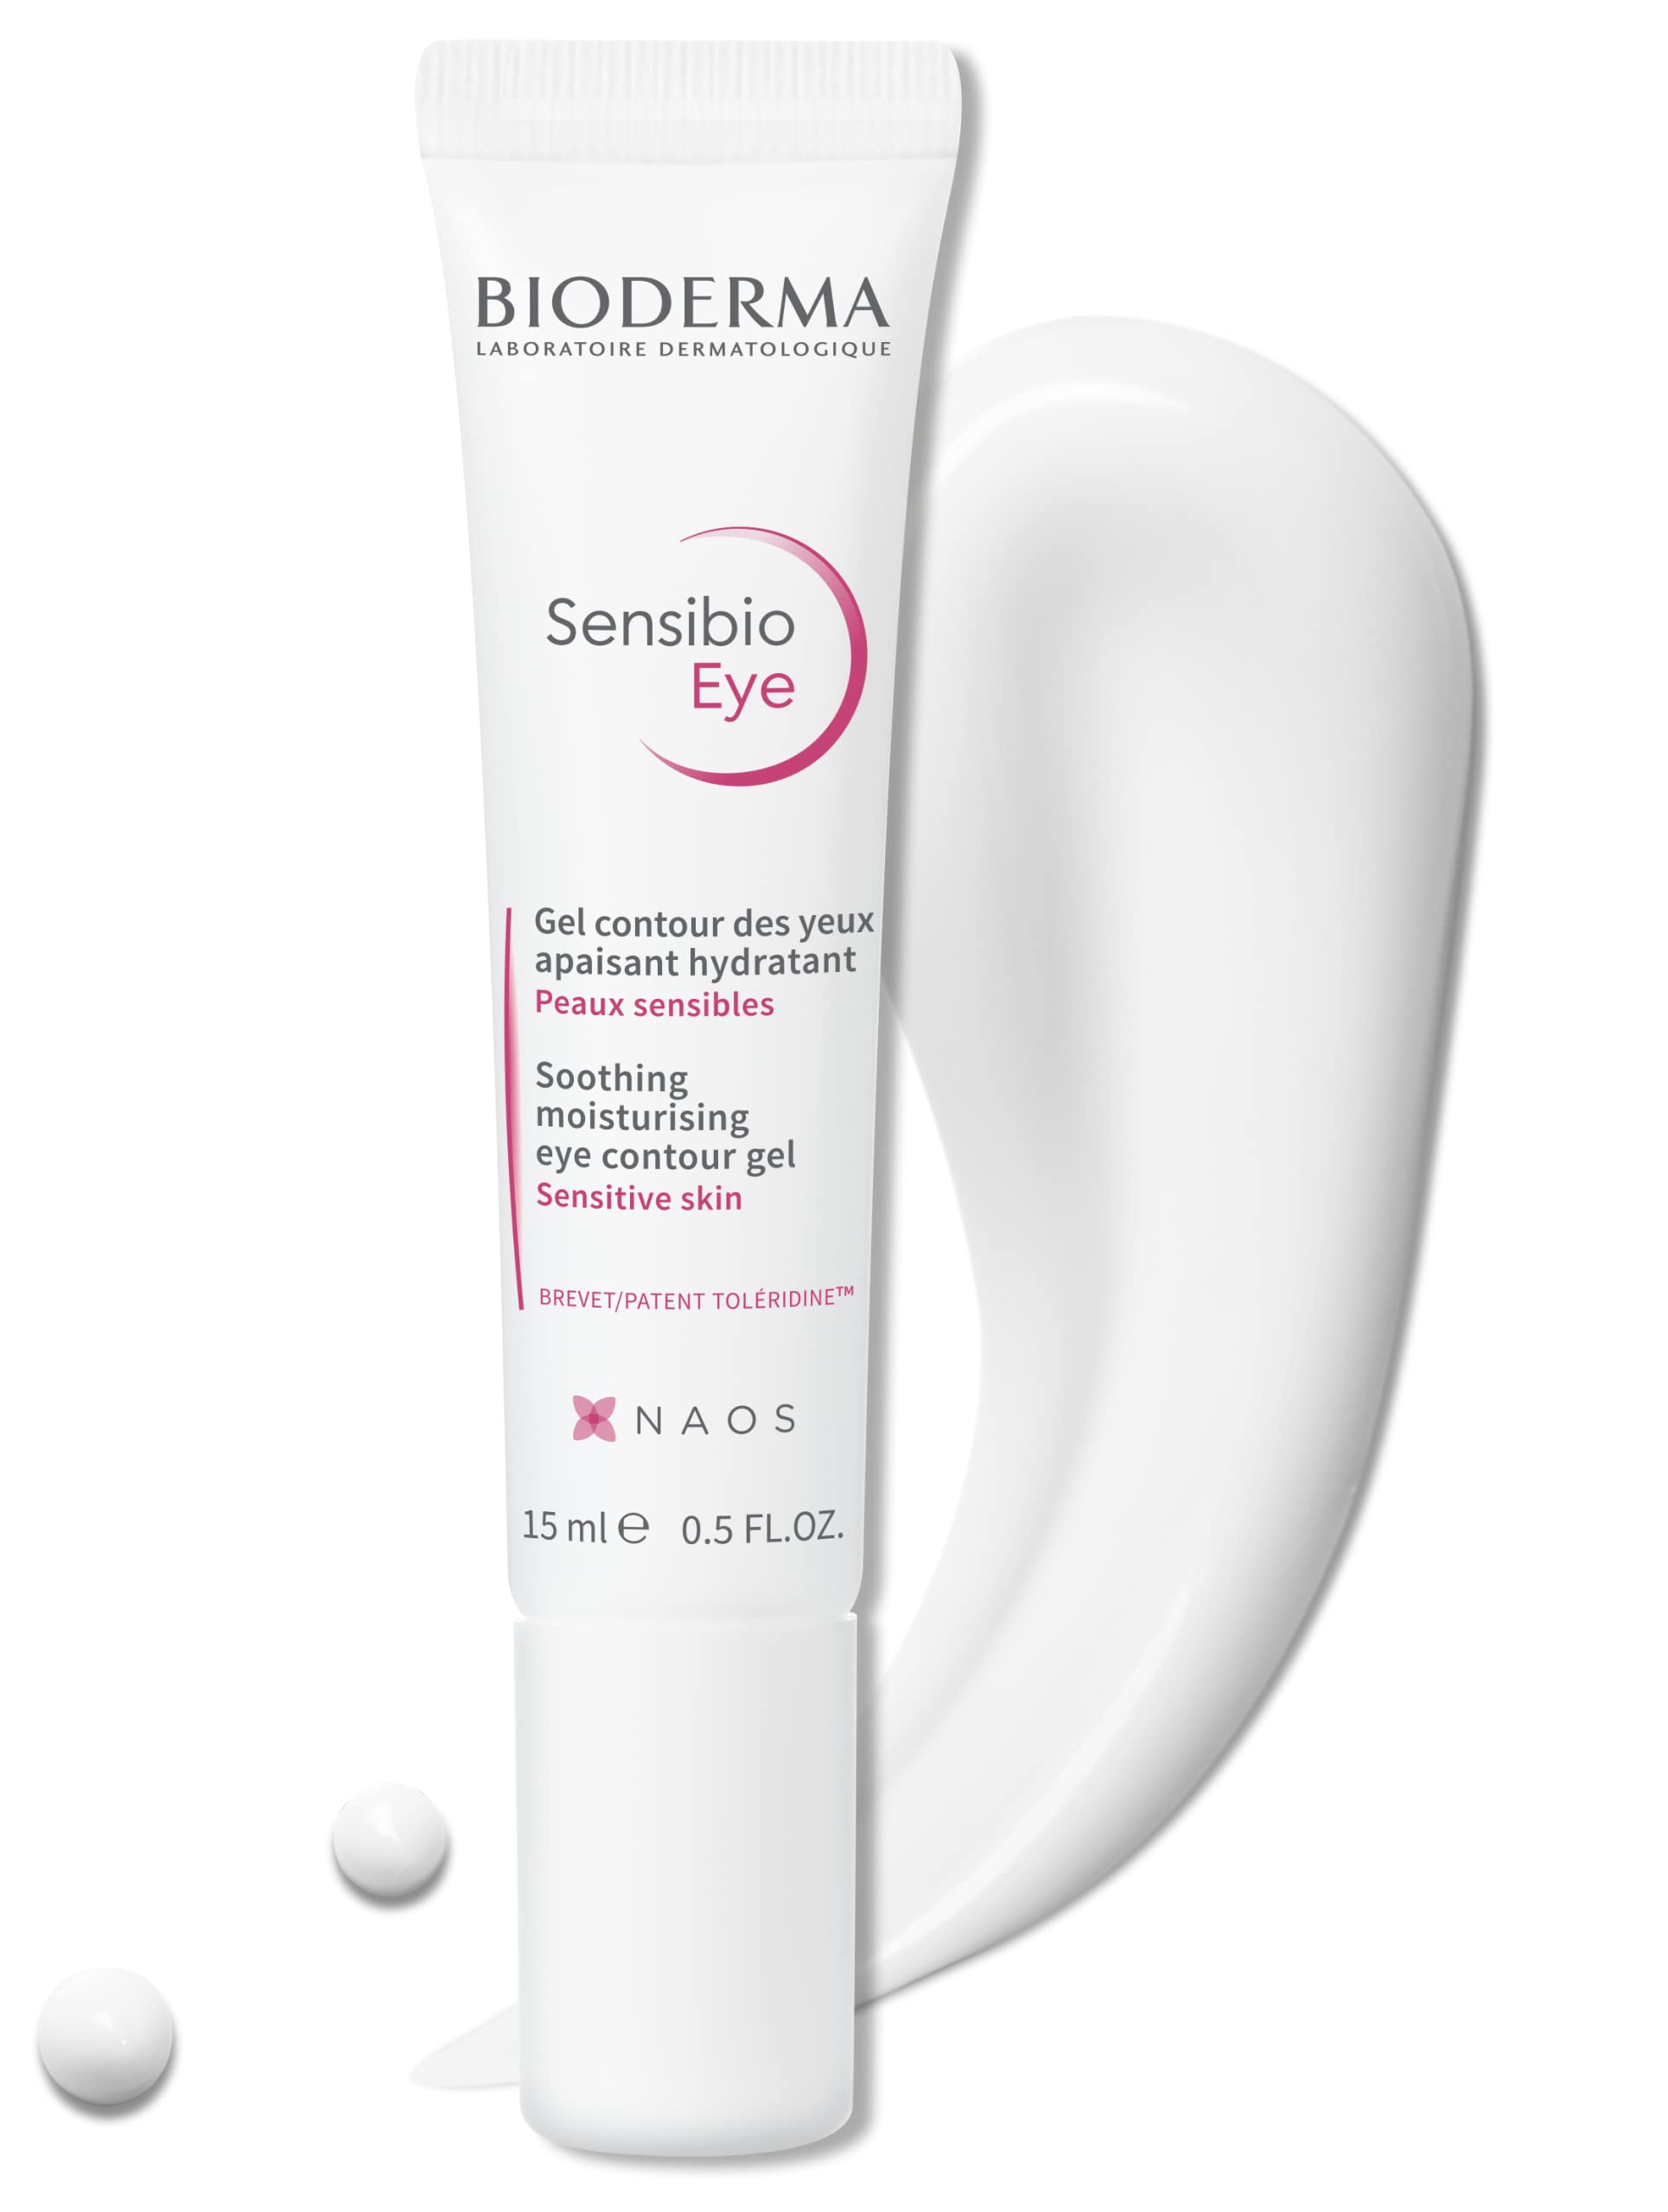 Bioderma - Eye Gel - Sensibio - Moisturizing and Visibly Reduces Fine Lines - Skin Soothing - Eye Gel for Sensitive Skin